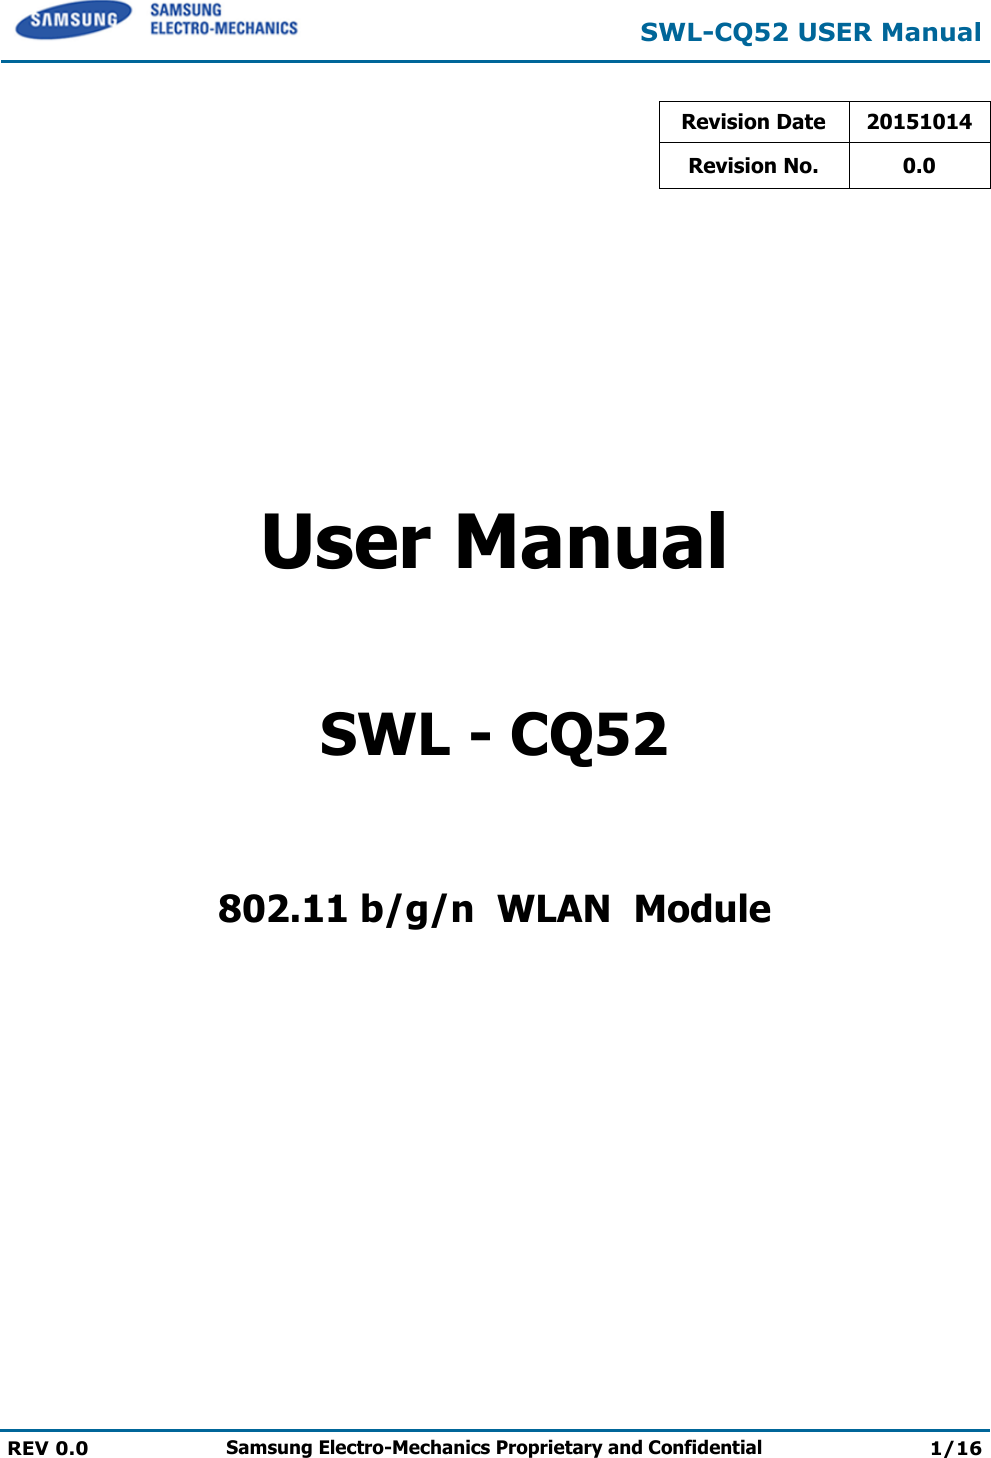  SWL-CQ52 USER Manual  REV 0.0 Samsung Electro-Mechanics Proprietary and Confidential 1/16  Revision Date 20151014 Revision No. 0.0       User Manual  SWL - CQ52  802.11 b/g/n  WLAN  Module    